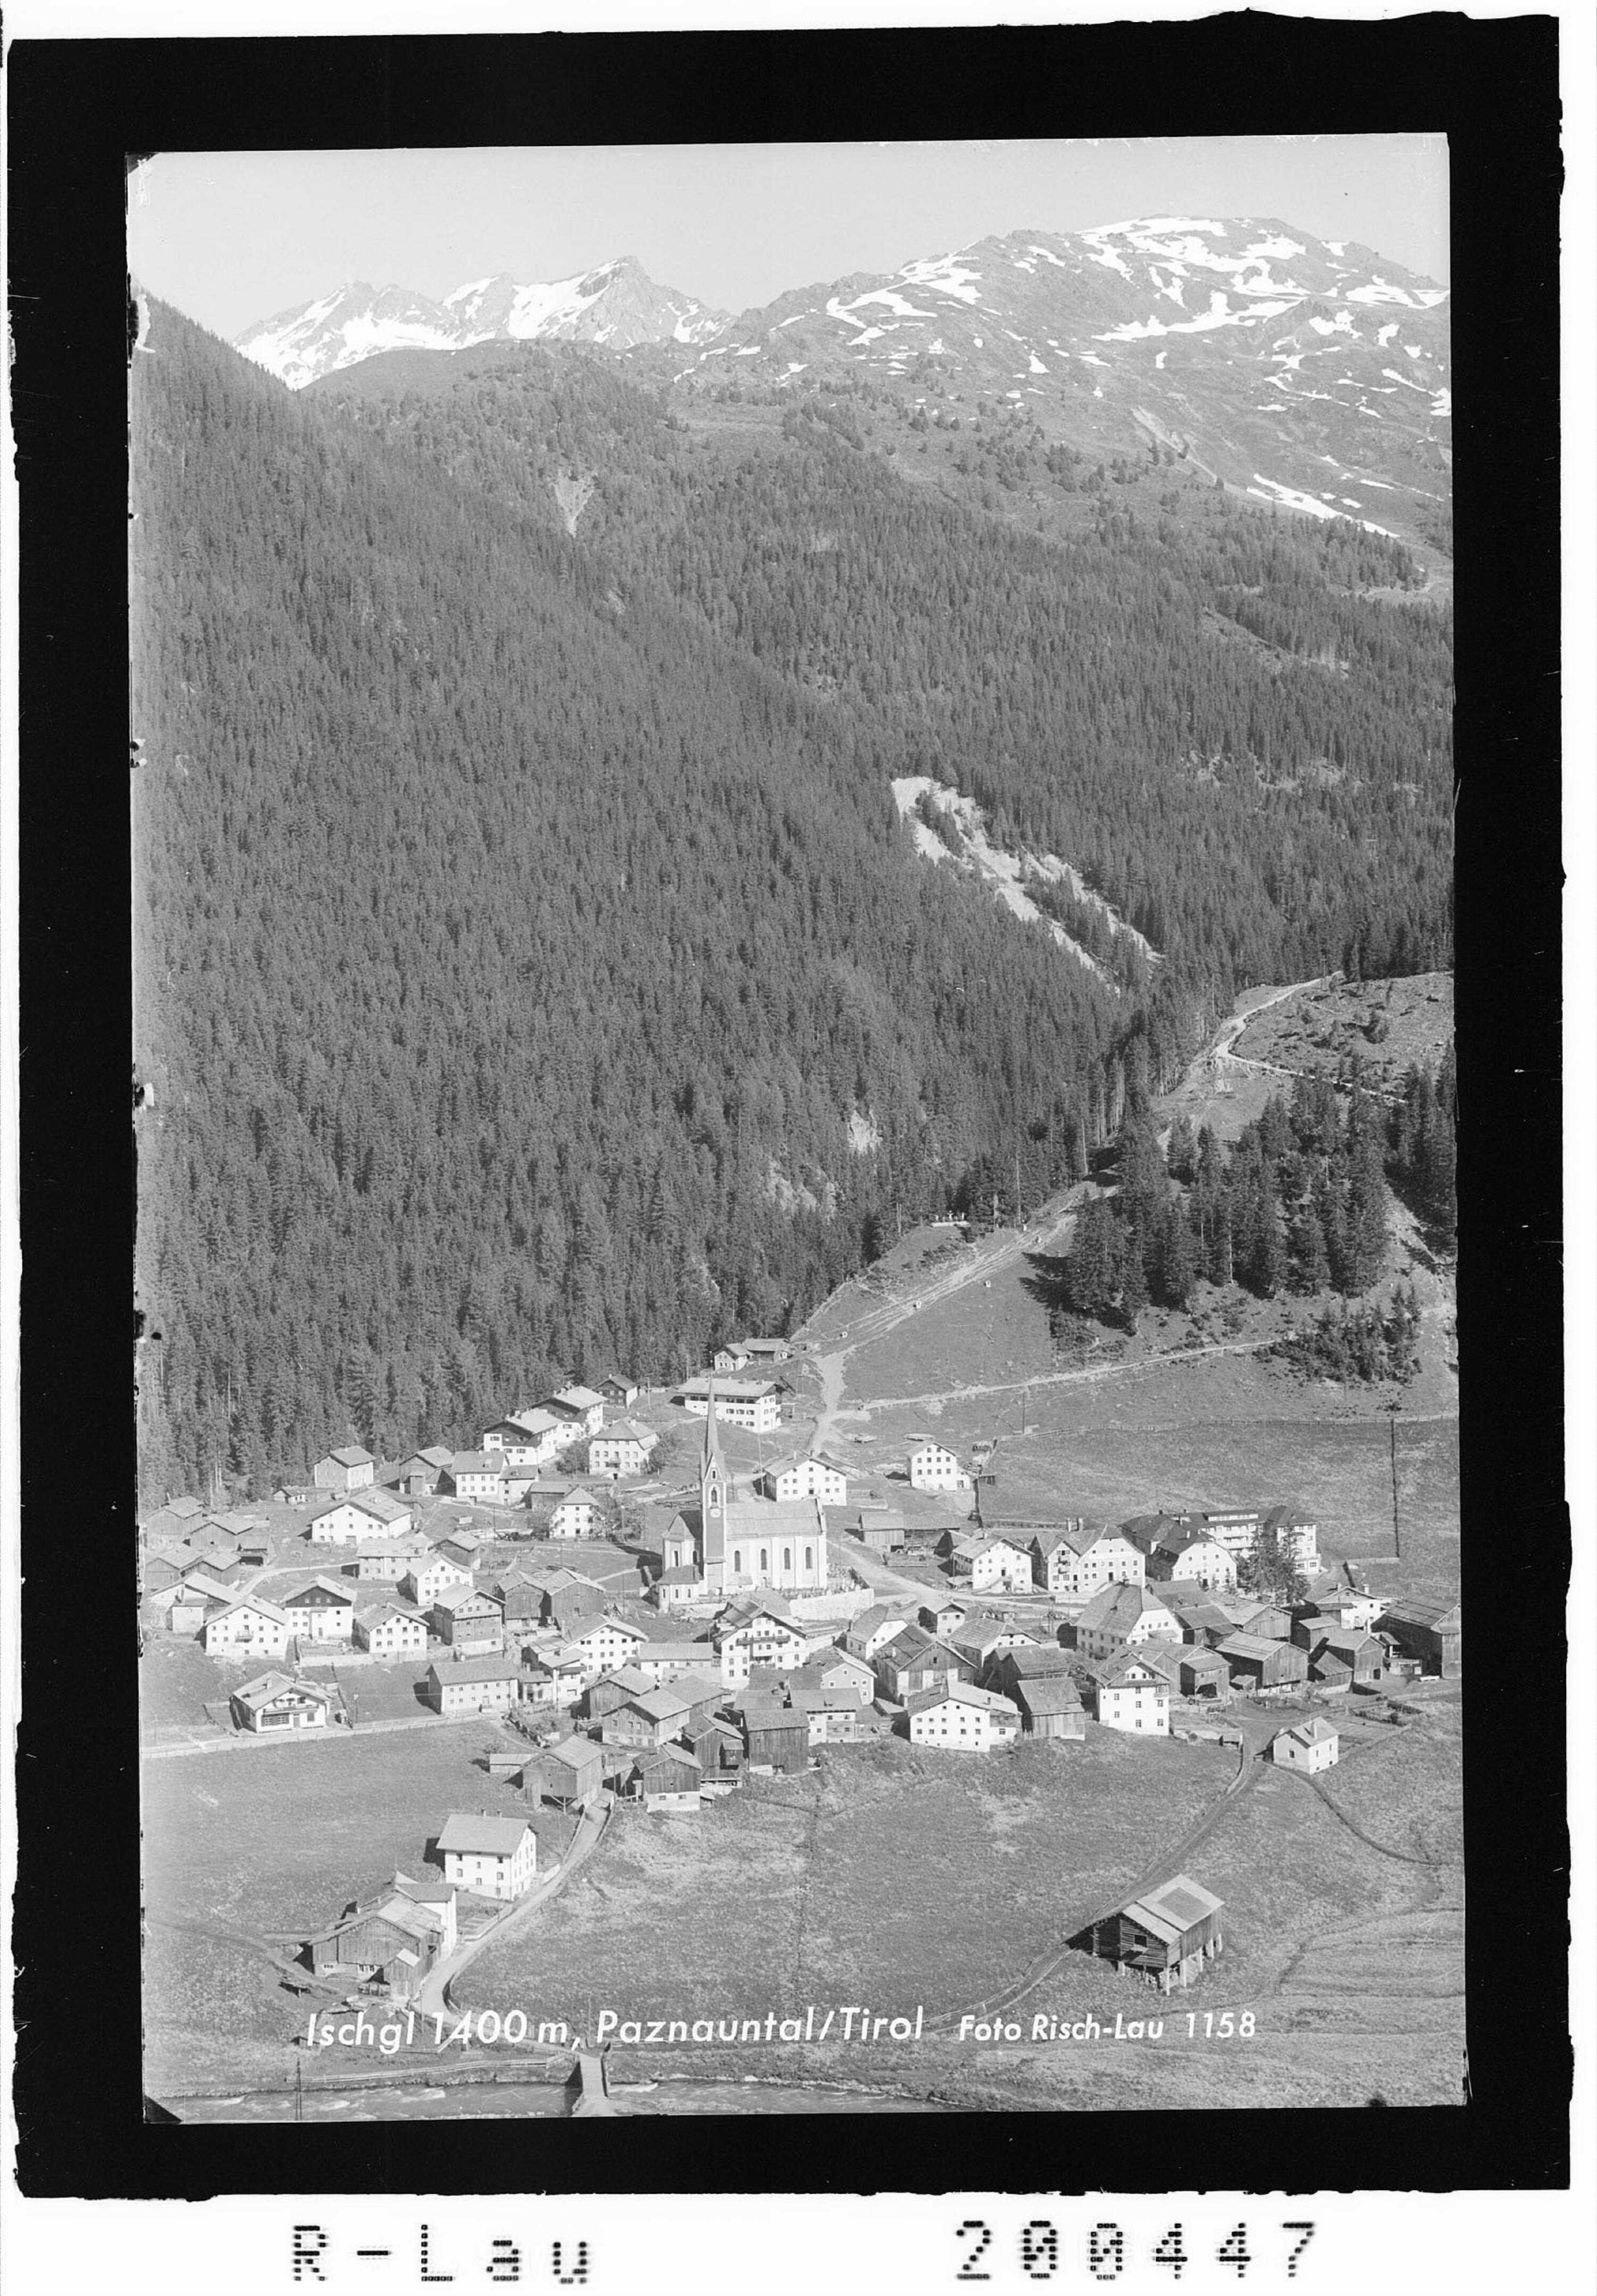 Ischgl 1400 m, Paznauntal Tirol></div>


    <hr>
    <div class=